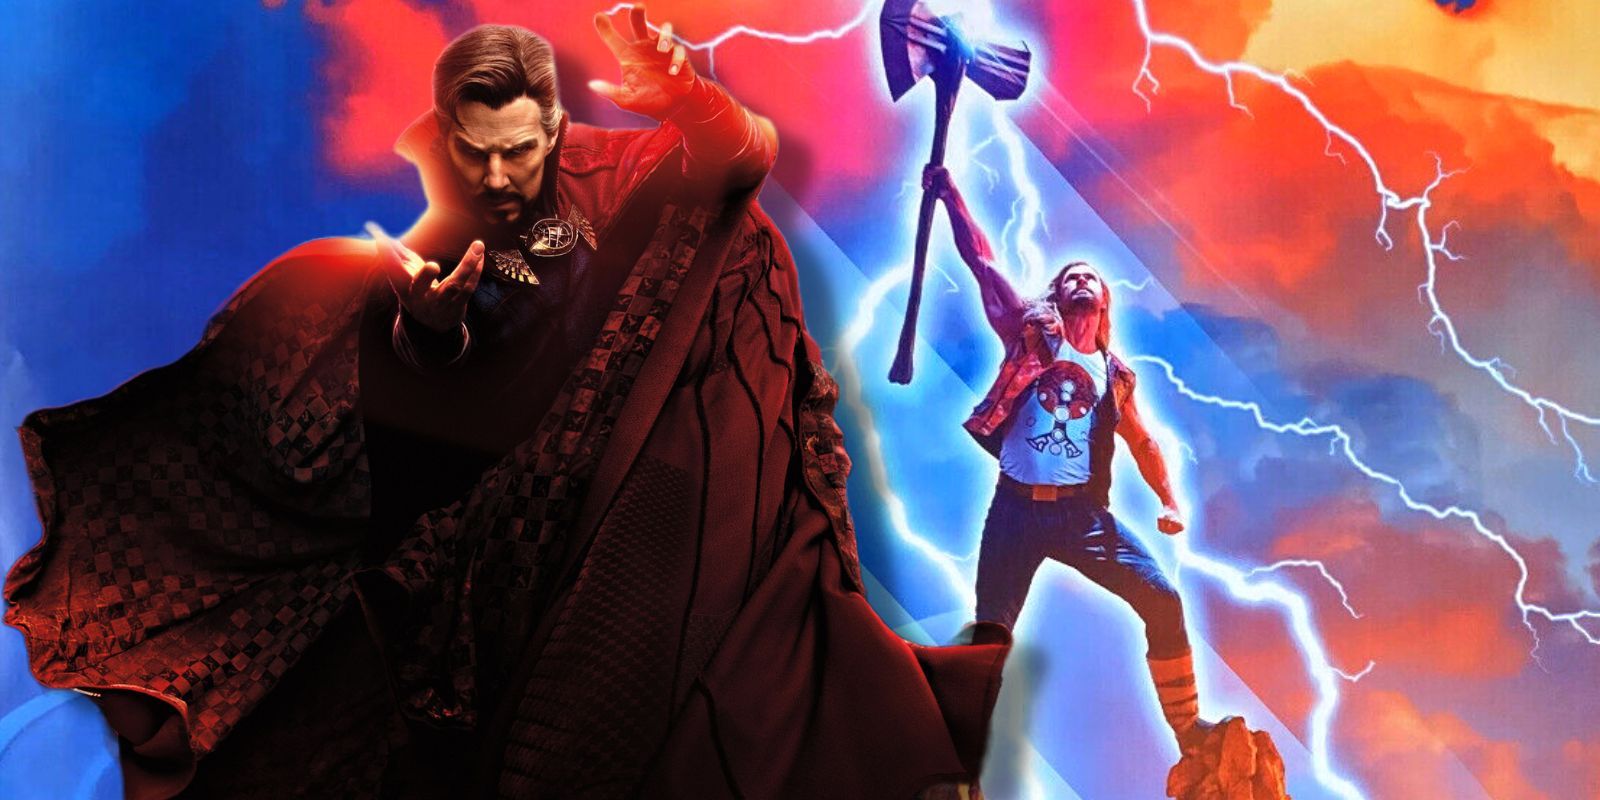 Doctor Strange next to Thor raises Stormbreaker into the air